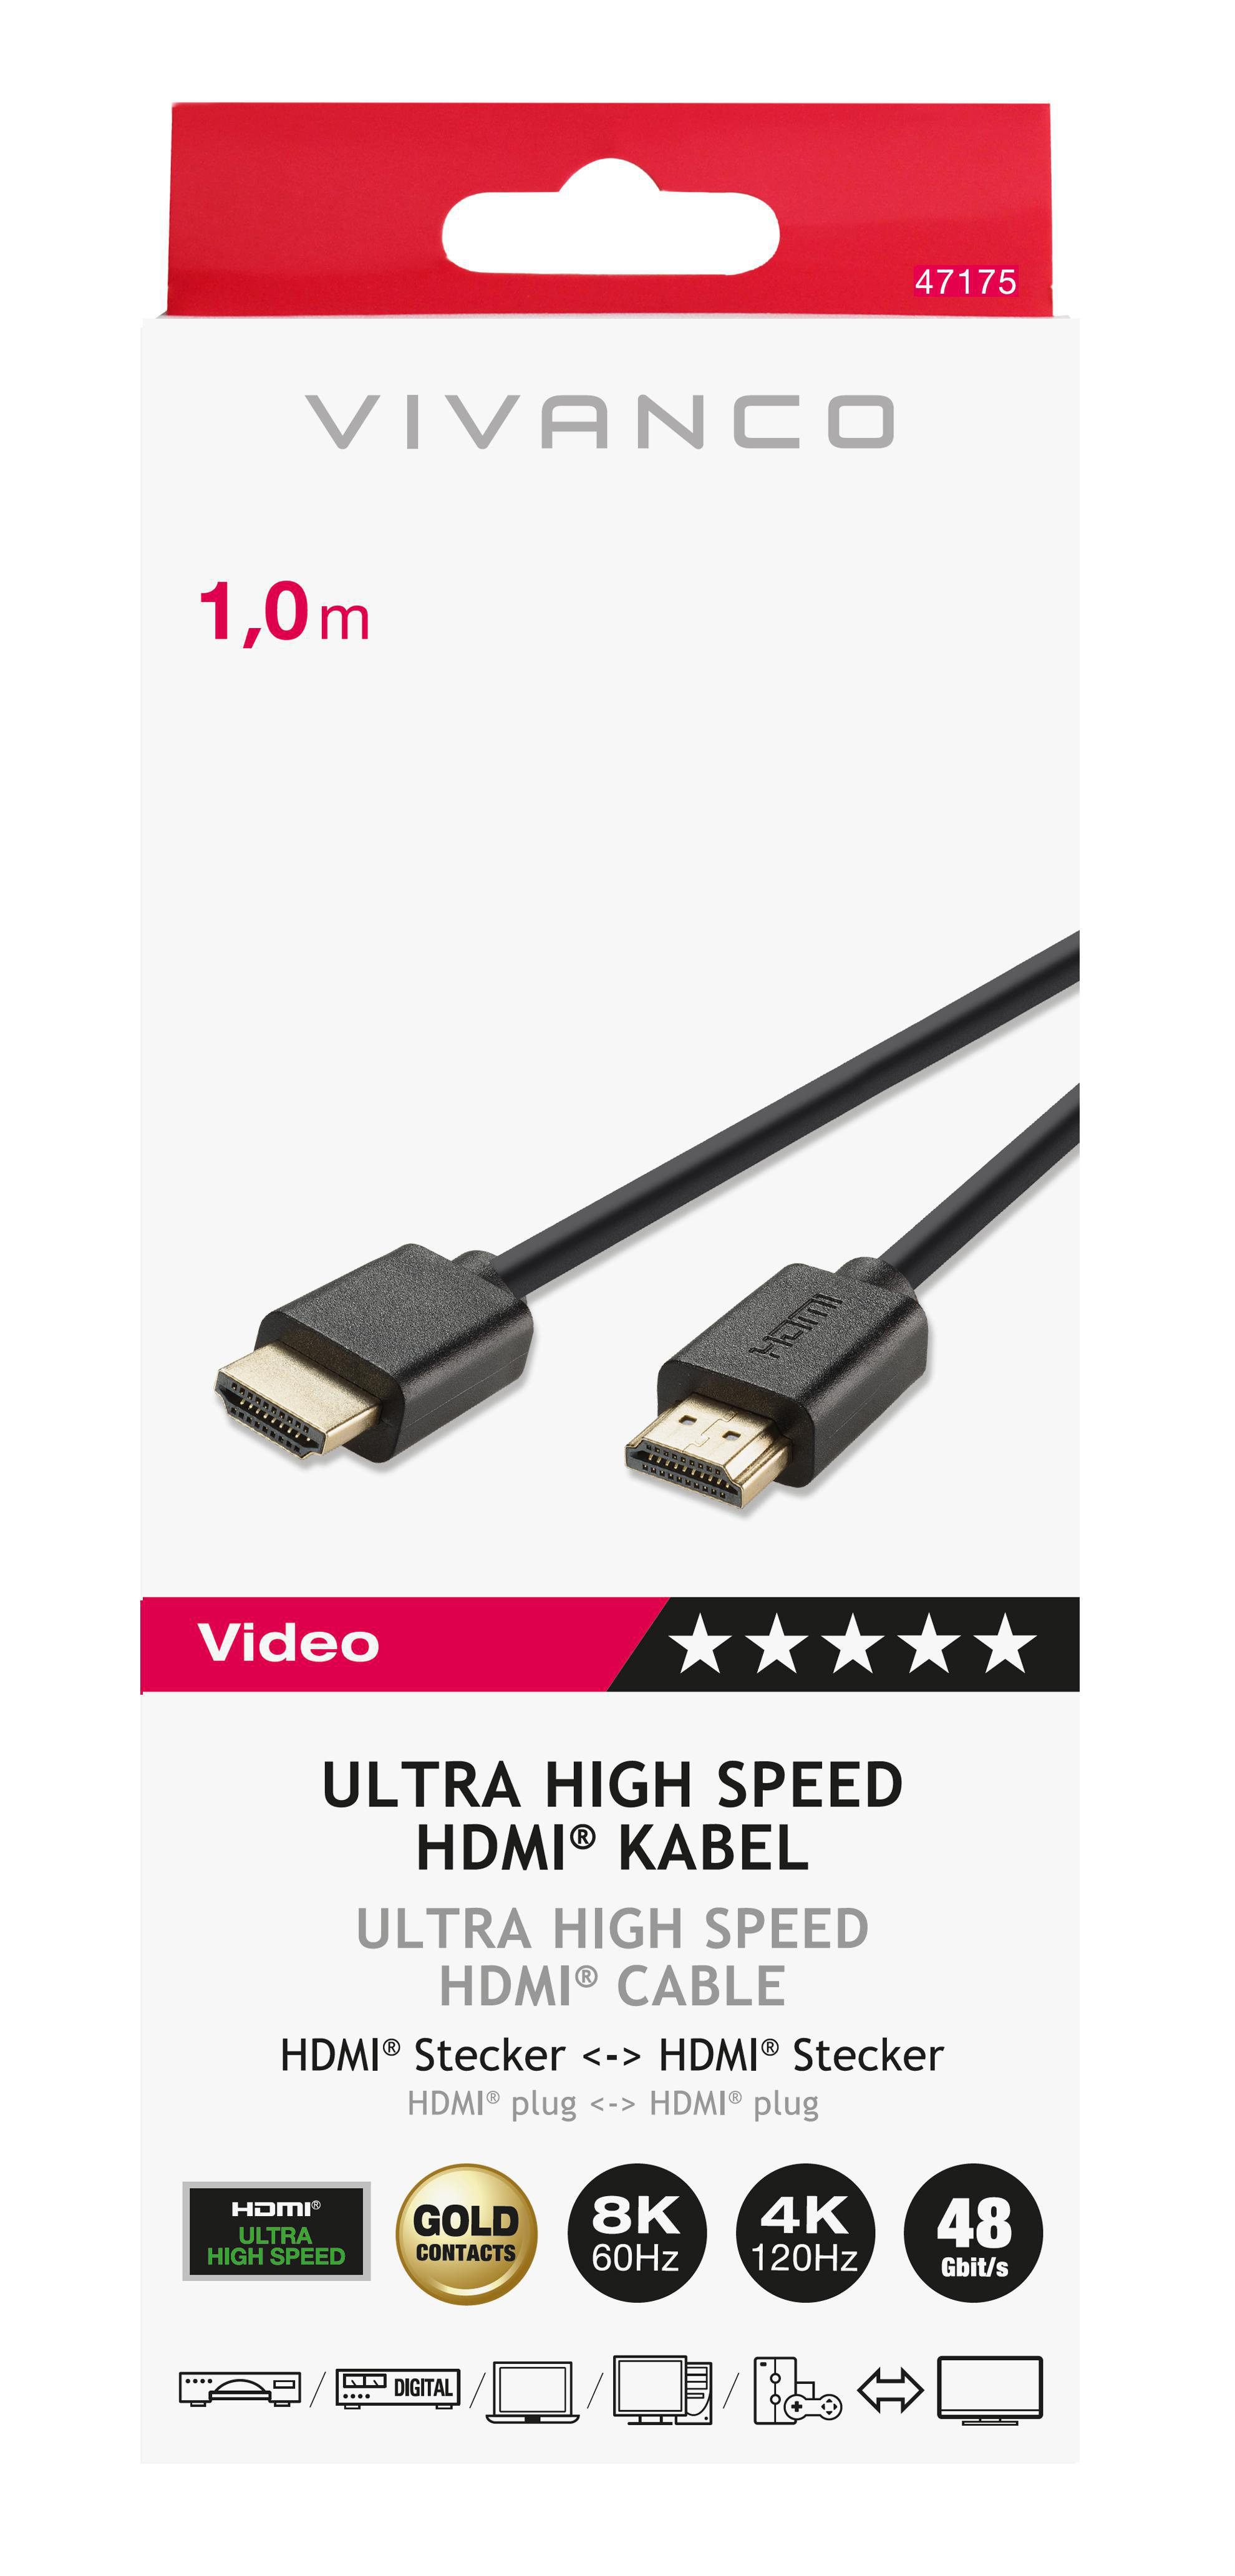 VIVANCO HDMI m Kabel, 1 47175,